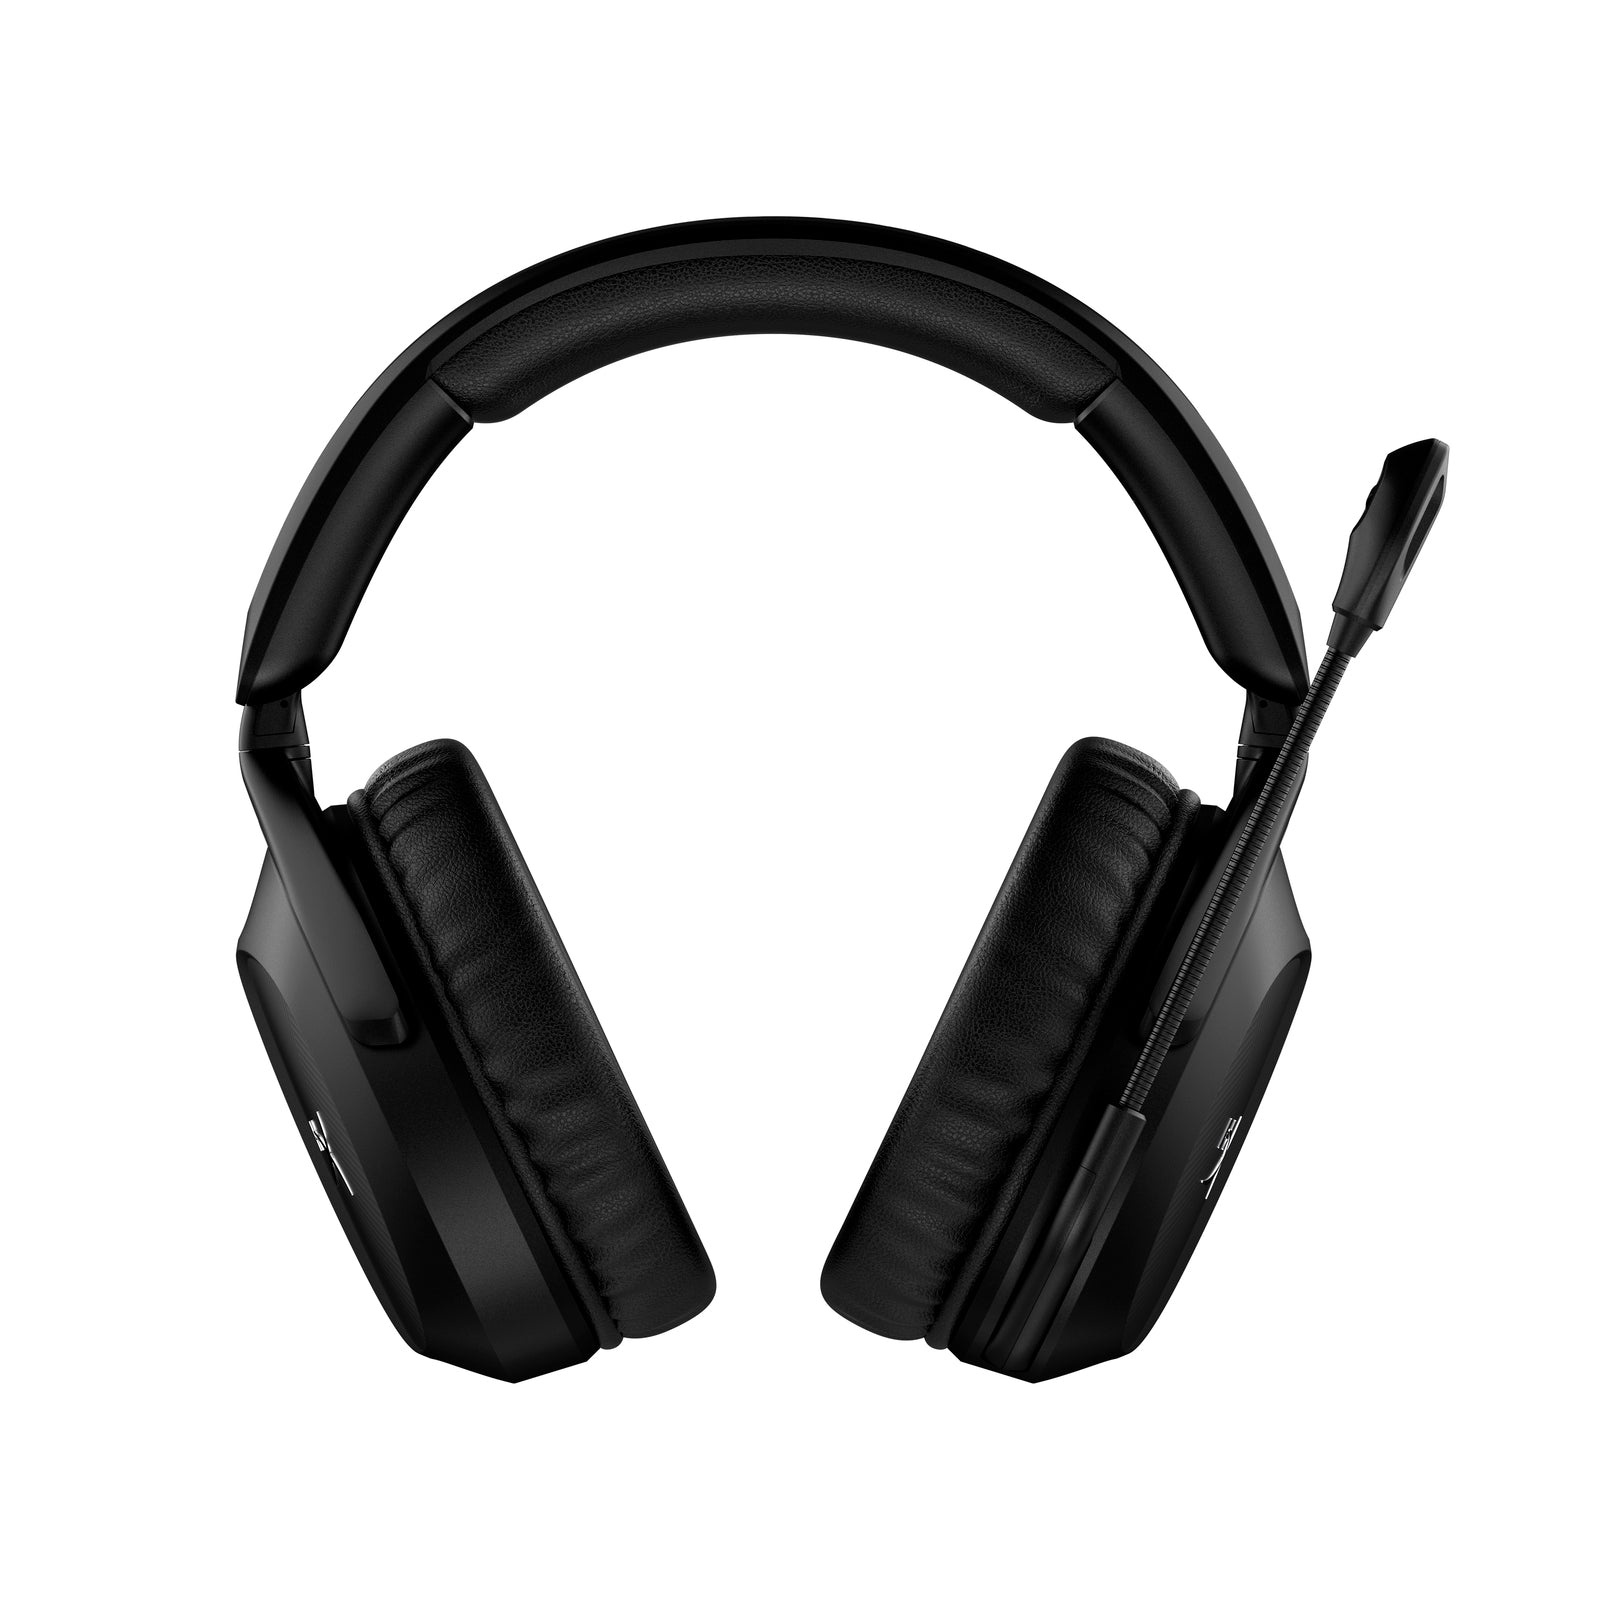 HyperX Cloud II Core Wireless - Gaming Headset for PC, DTS Headphone:X  Spatial Audio, Memory Foam Ear Pads, Black